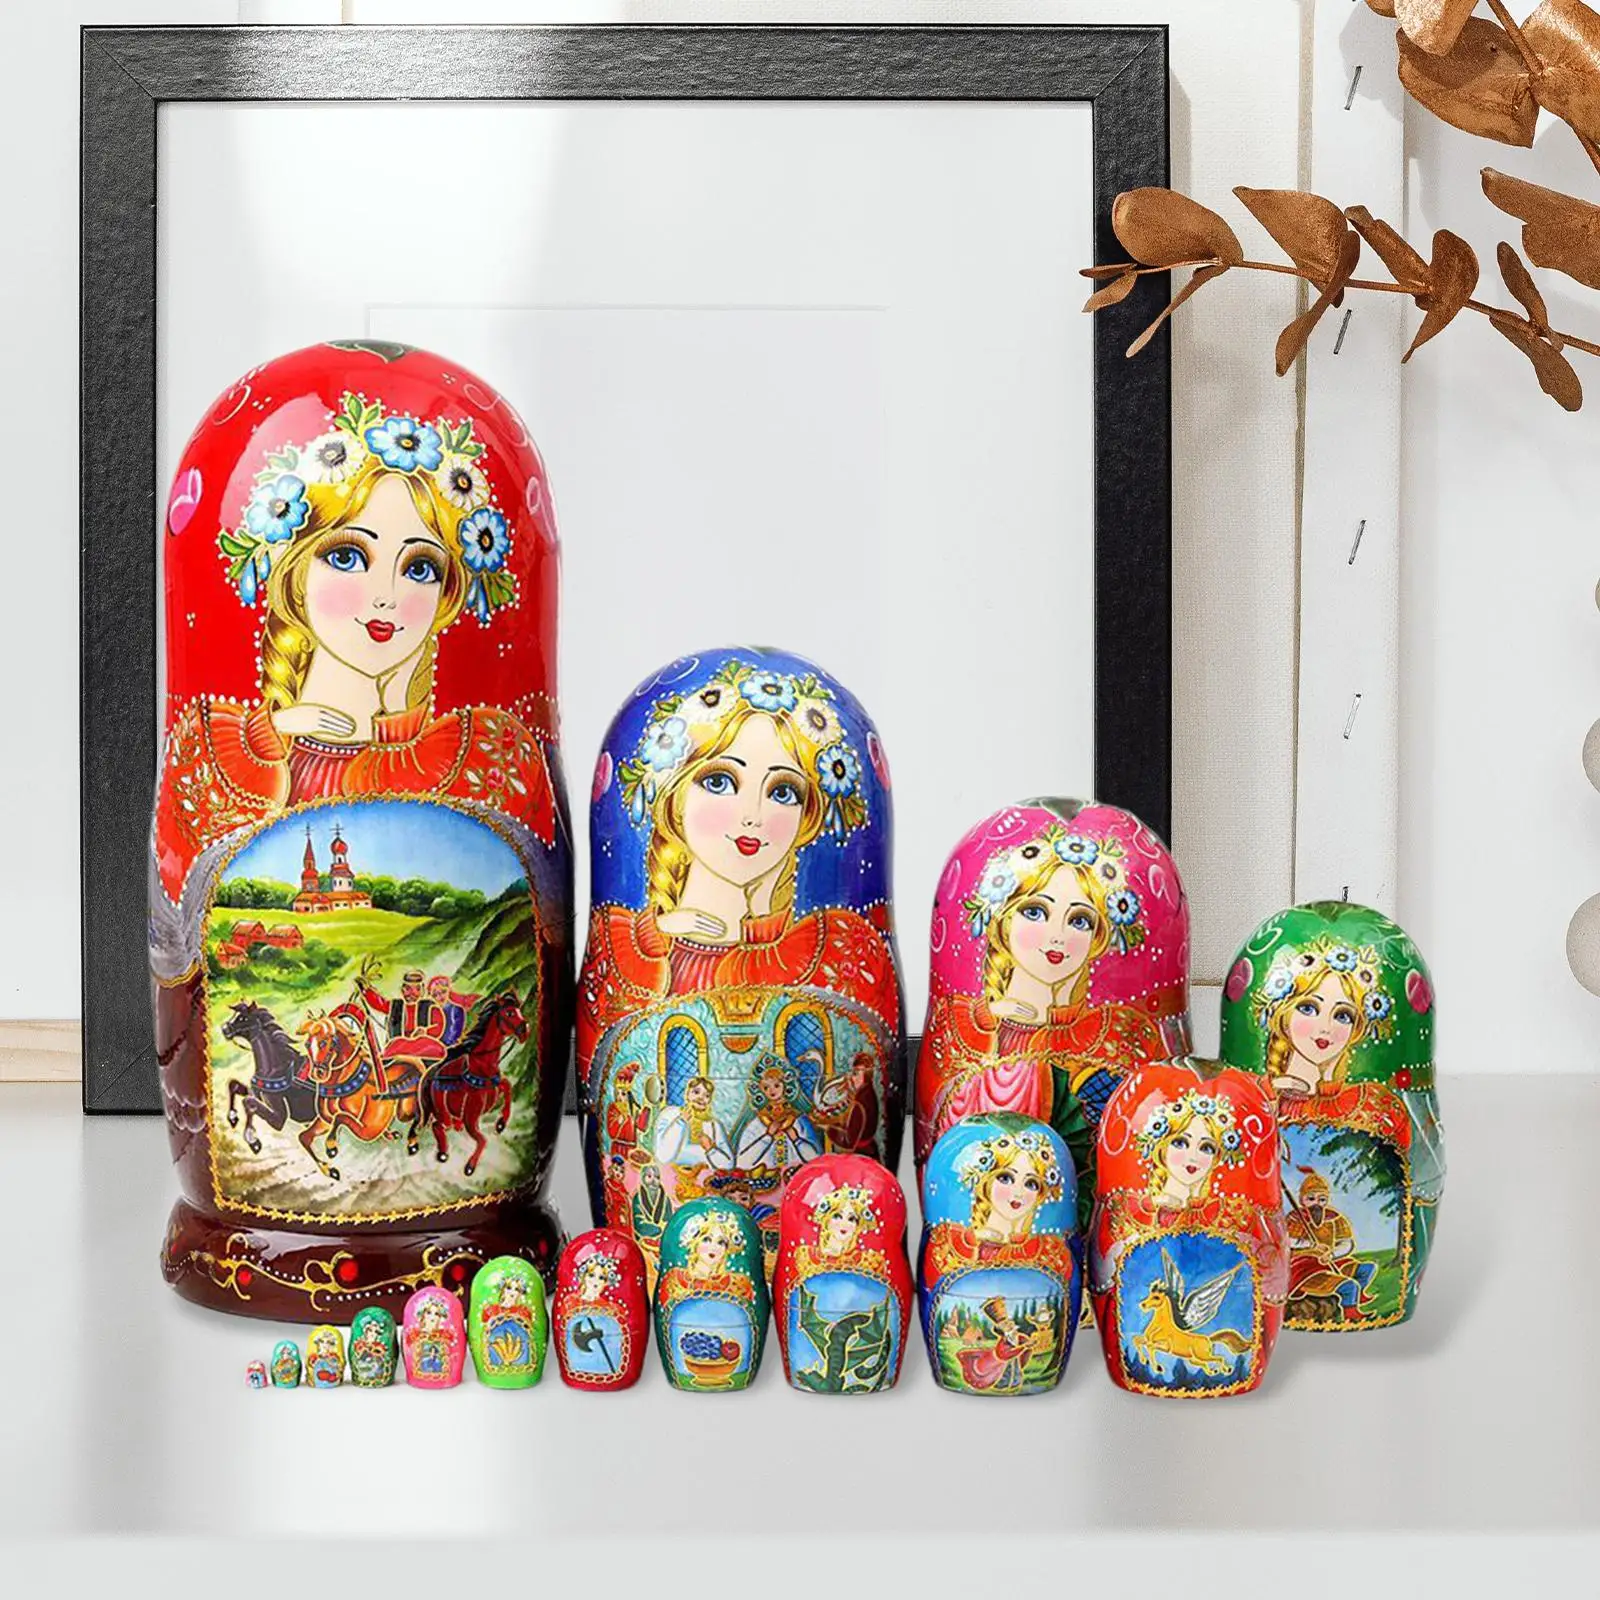 

15x Handpainted Russian Matryoshka Doll Nesting Doll Crafts Kids Toy Stacking Doll